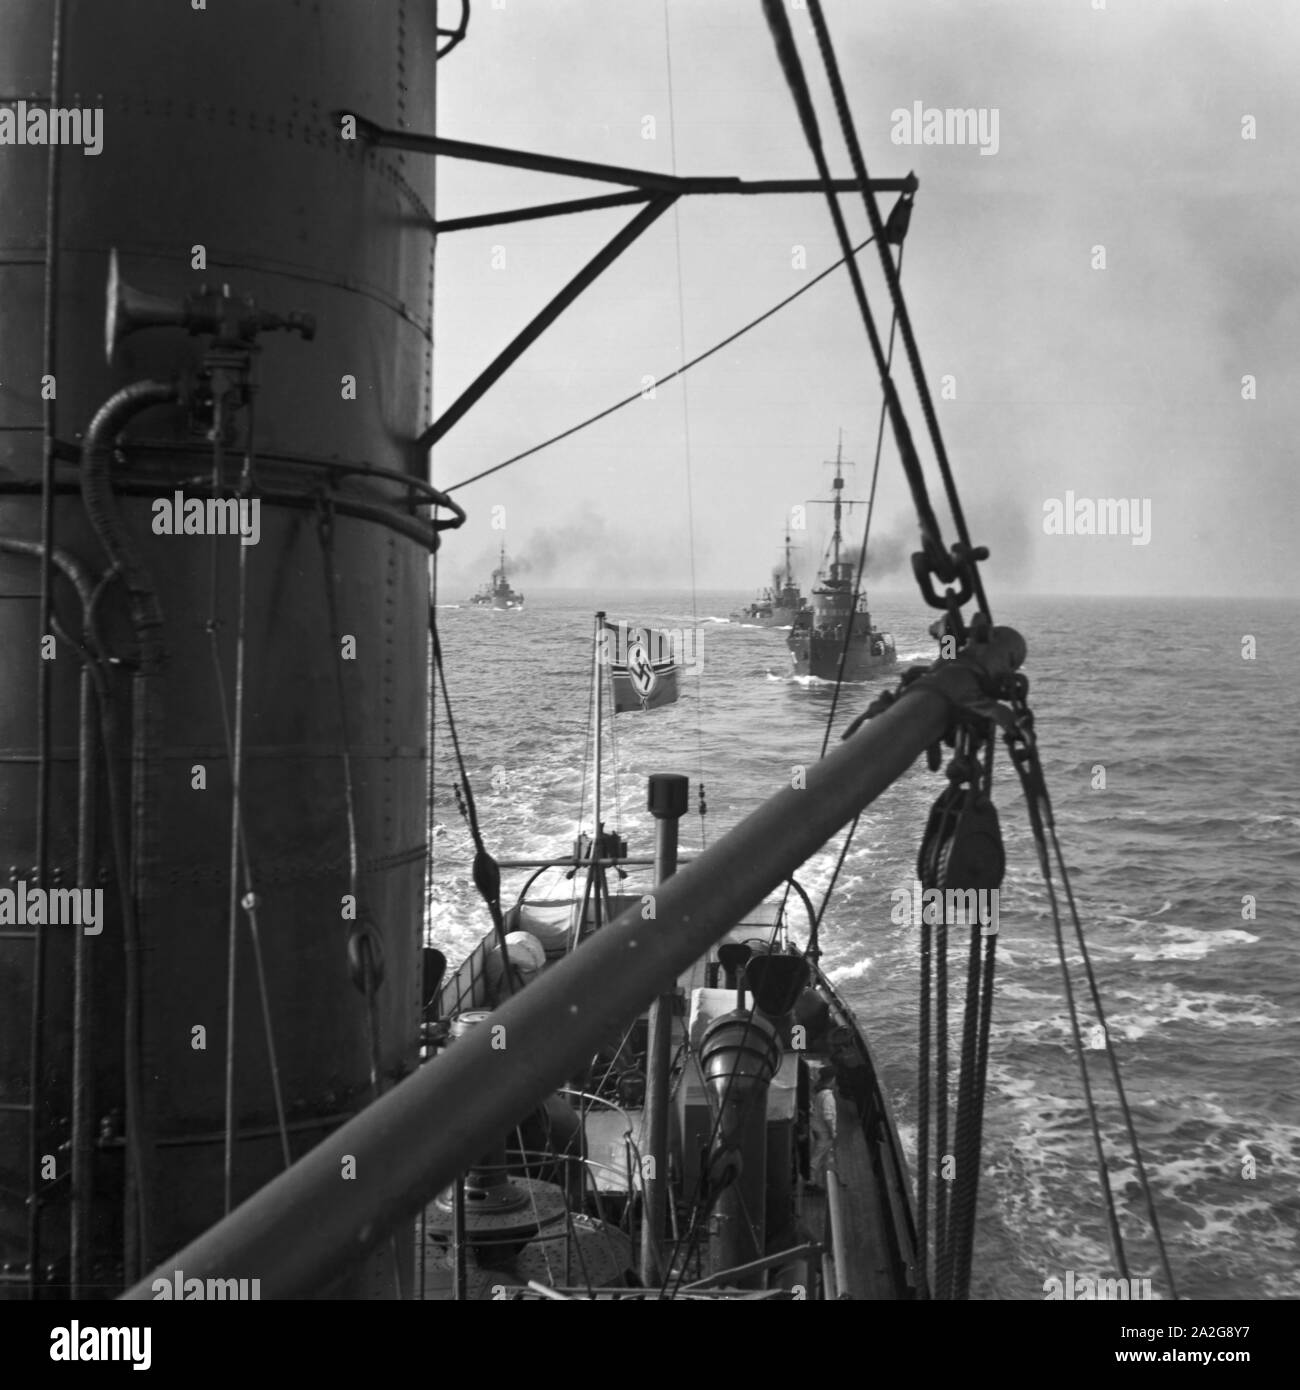 Minensuchboote der 2. Minensuch Flotille bei einer Übung in Kolonne, Deutschland 1930er Jahre. Minesweepers at an exercise on the sea, Germany 1930s. Stock Photo